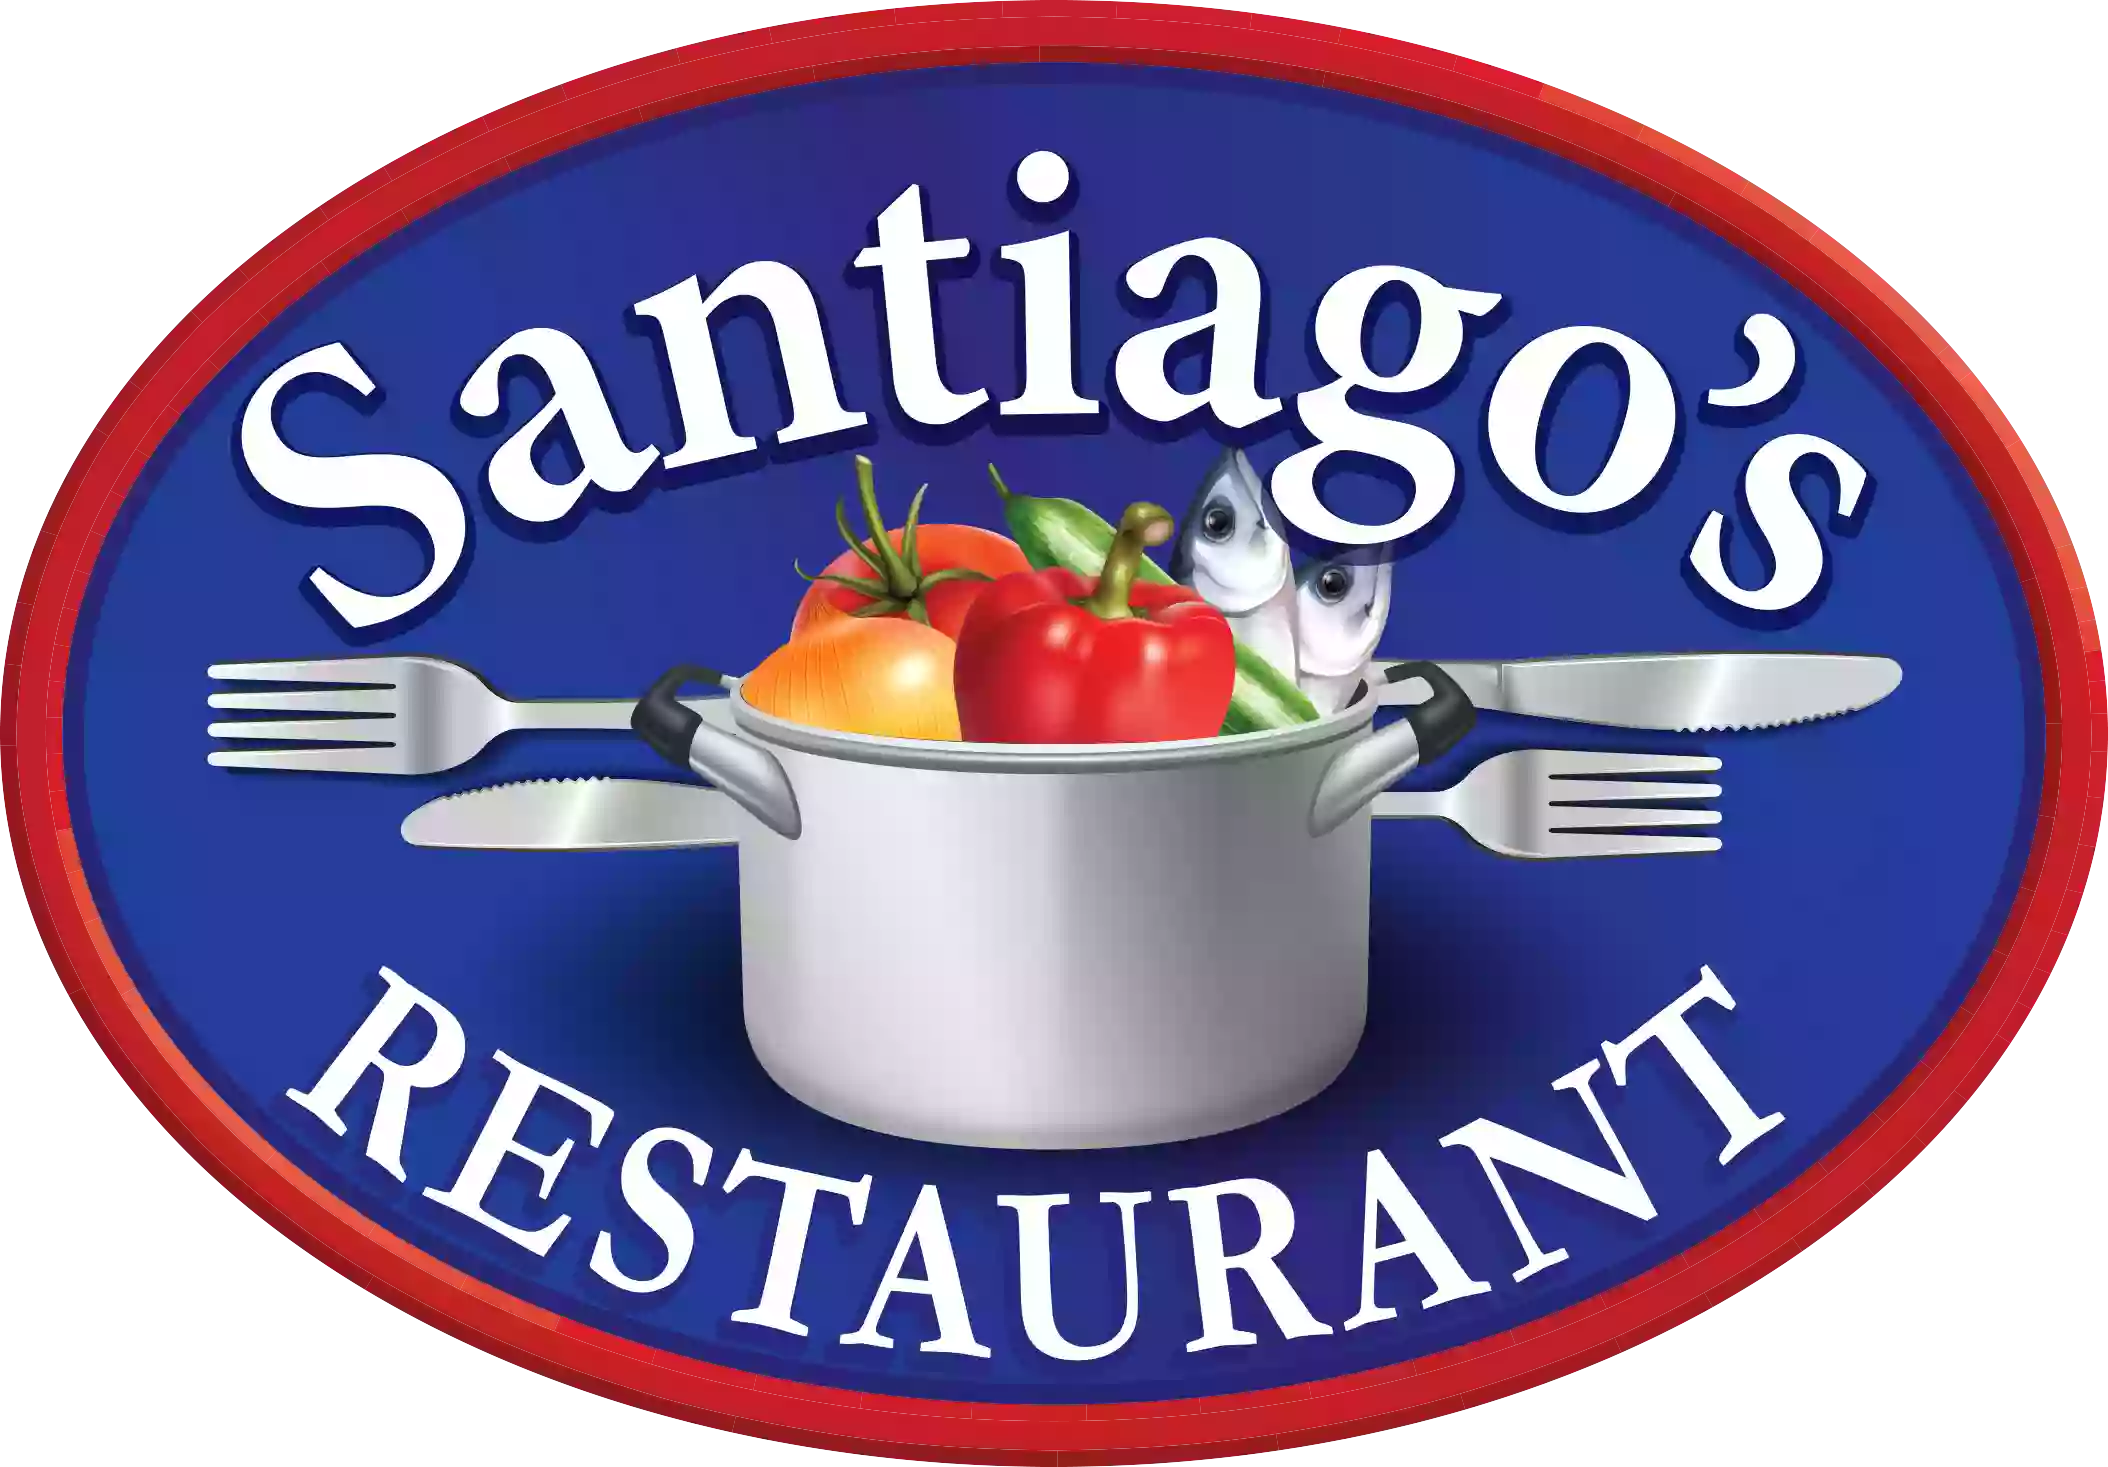 Santiago’s Restaurant